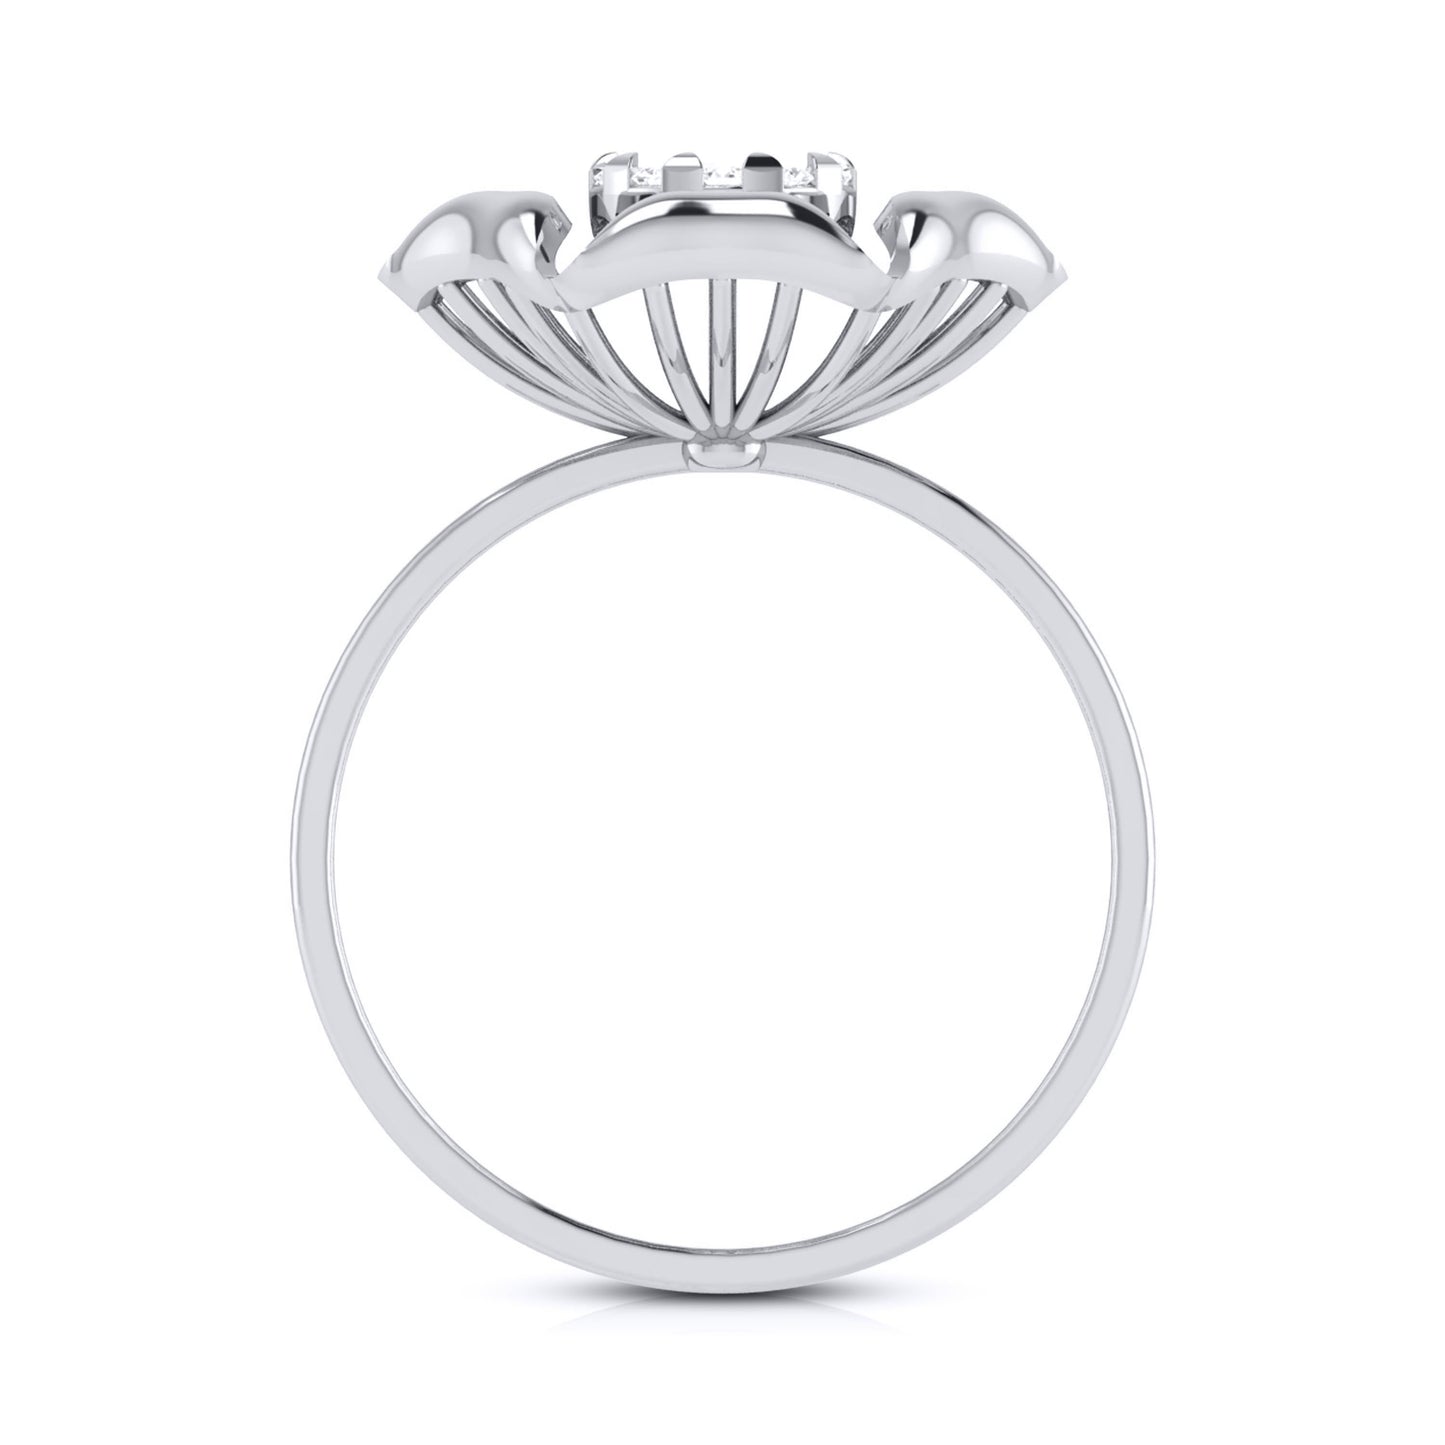 Buy 18Kt Solitaire Diamond Finger Ring 148VH56 Online from Vaibhav Jewellers